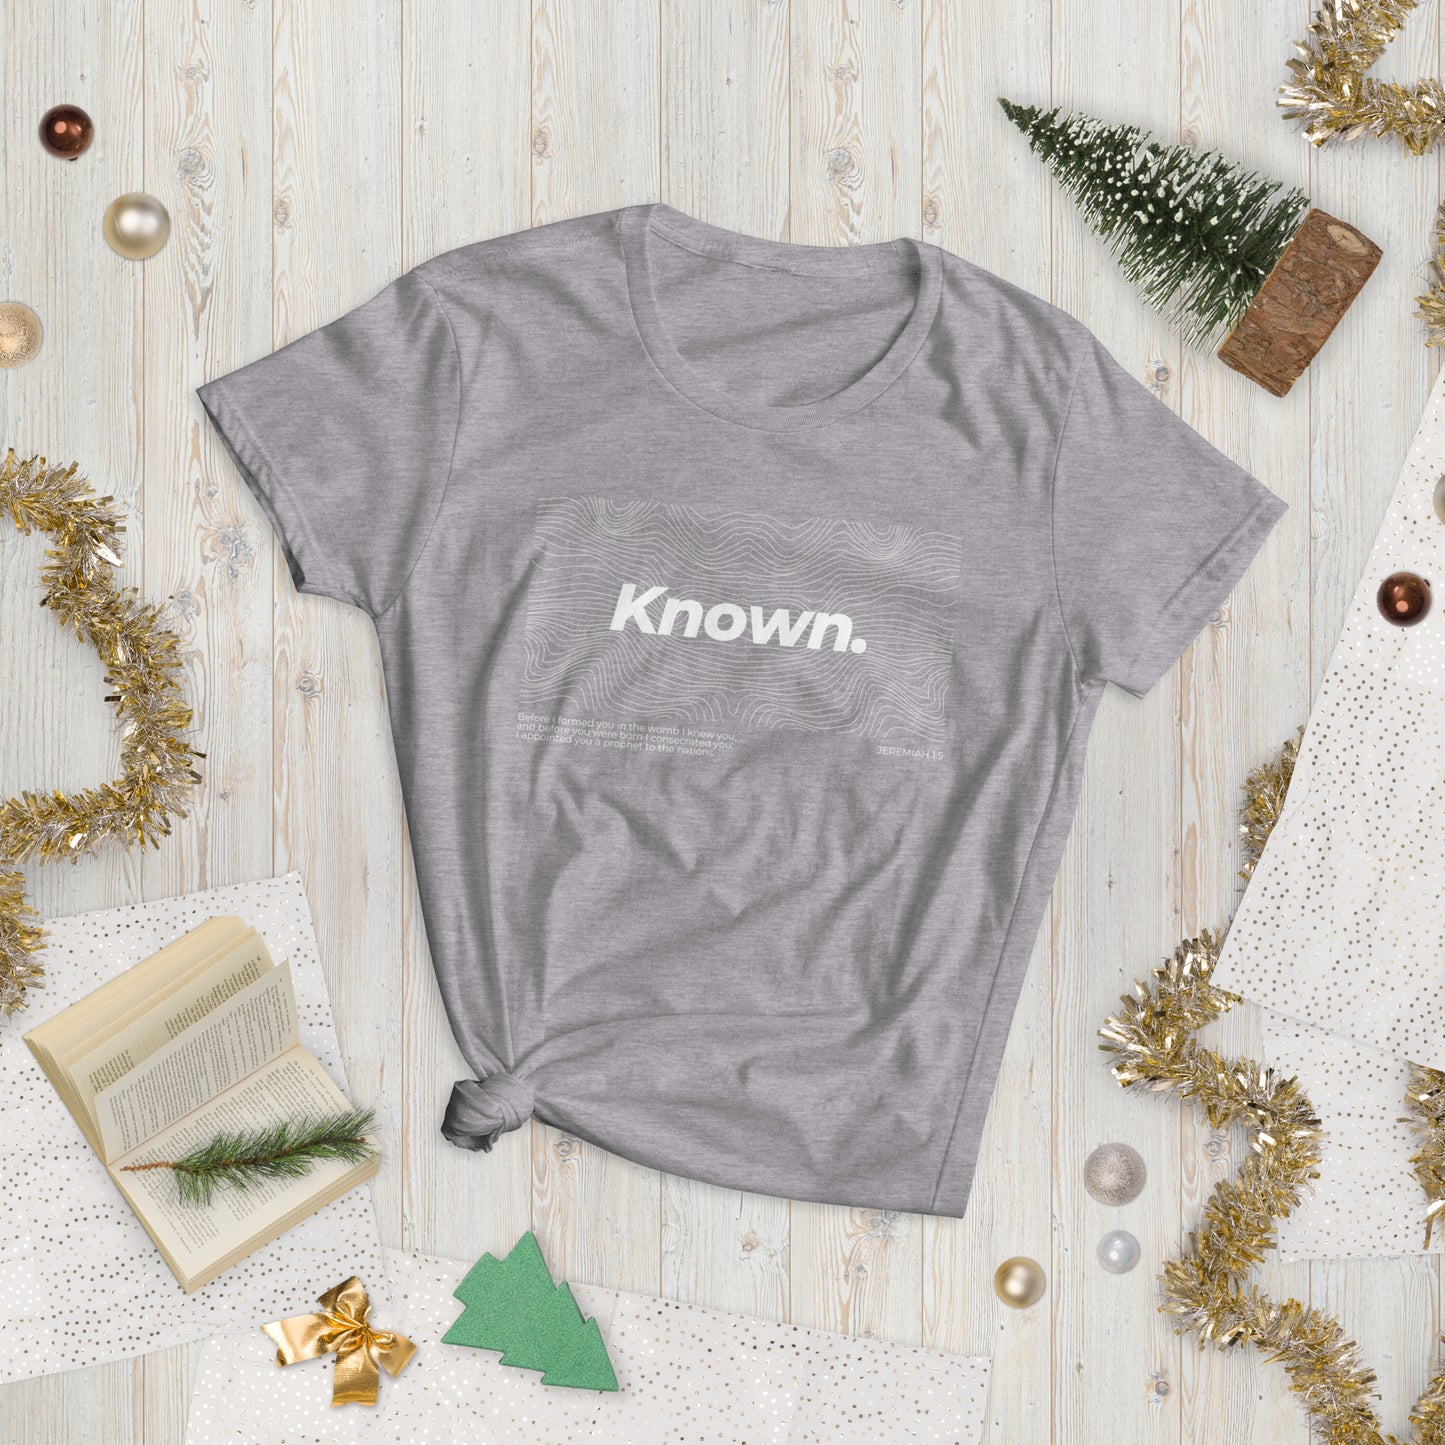 "Known" - Women's short sleeve t-shirt